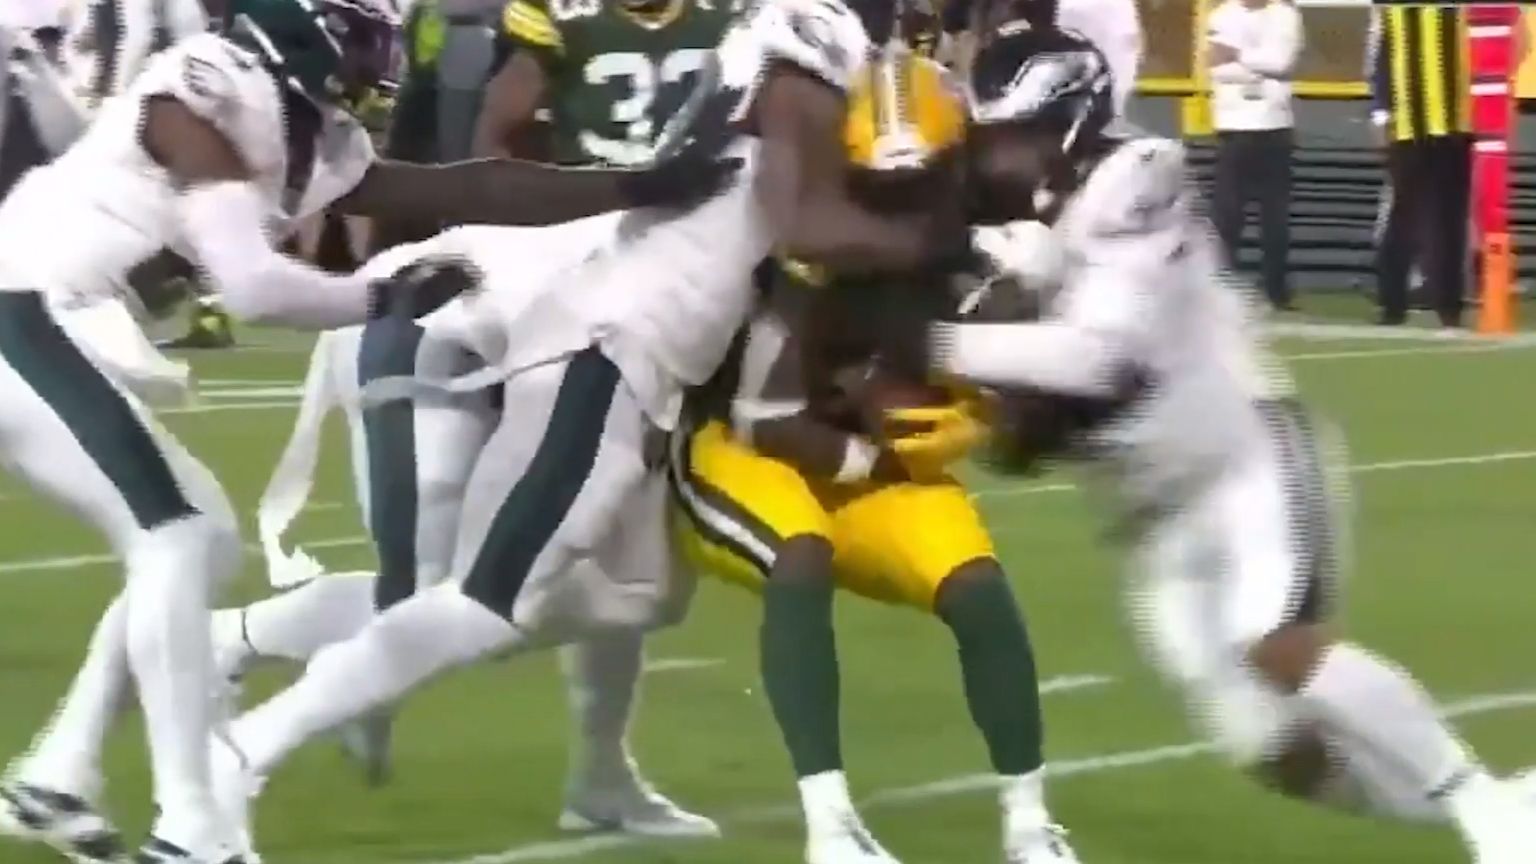 'Cheap shot': Green Bay Packers running back Jamal Williams motionless after sickening clash